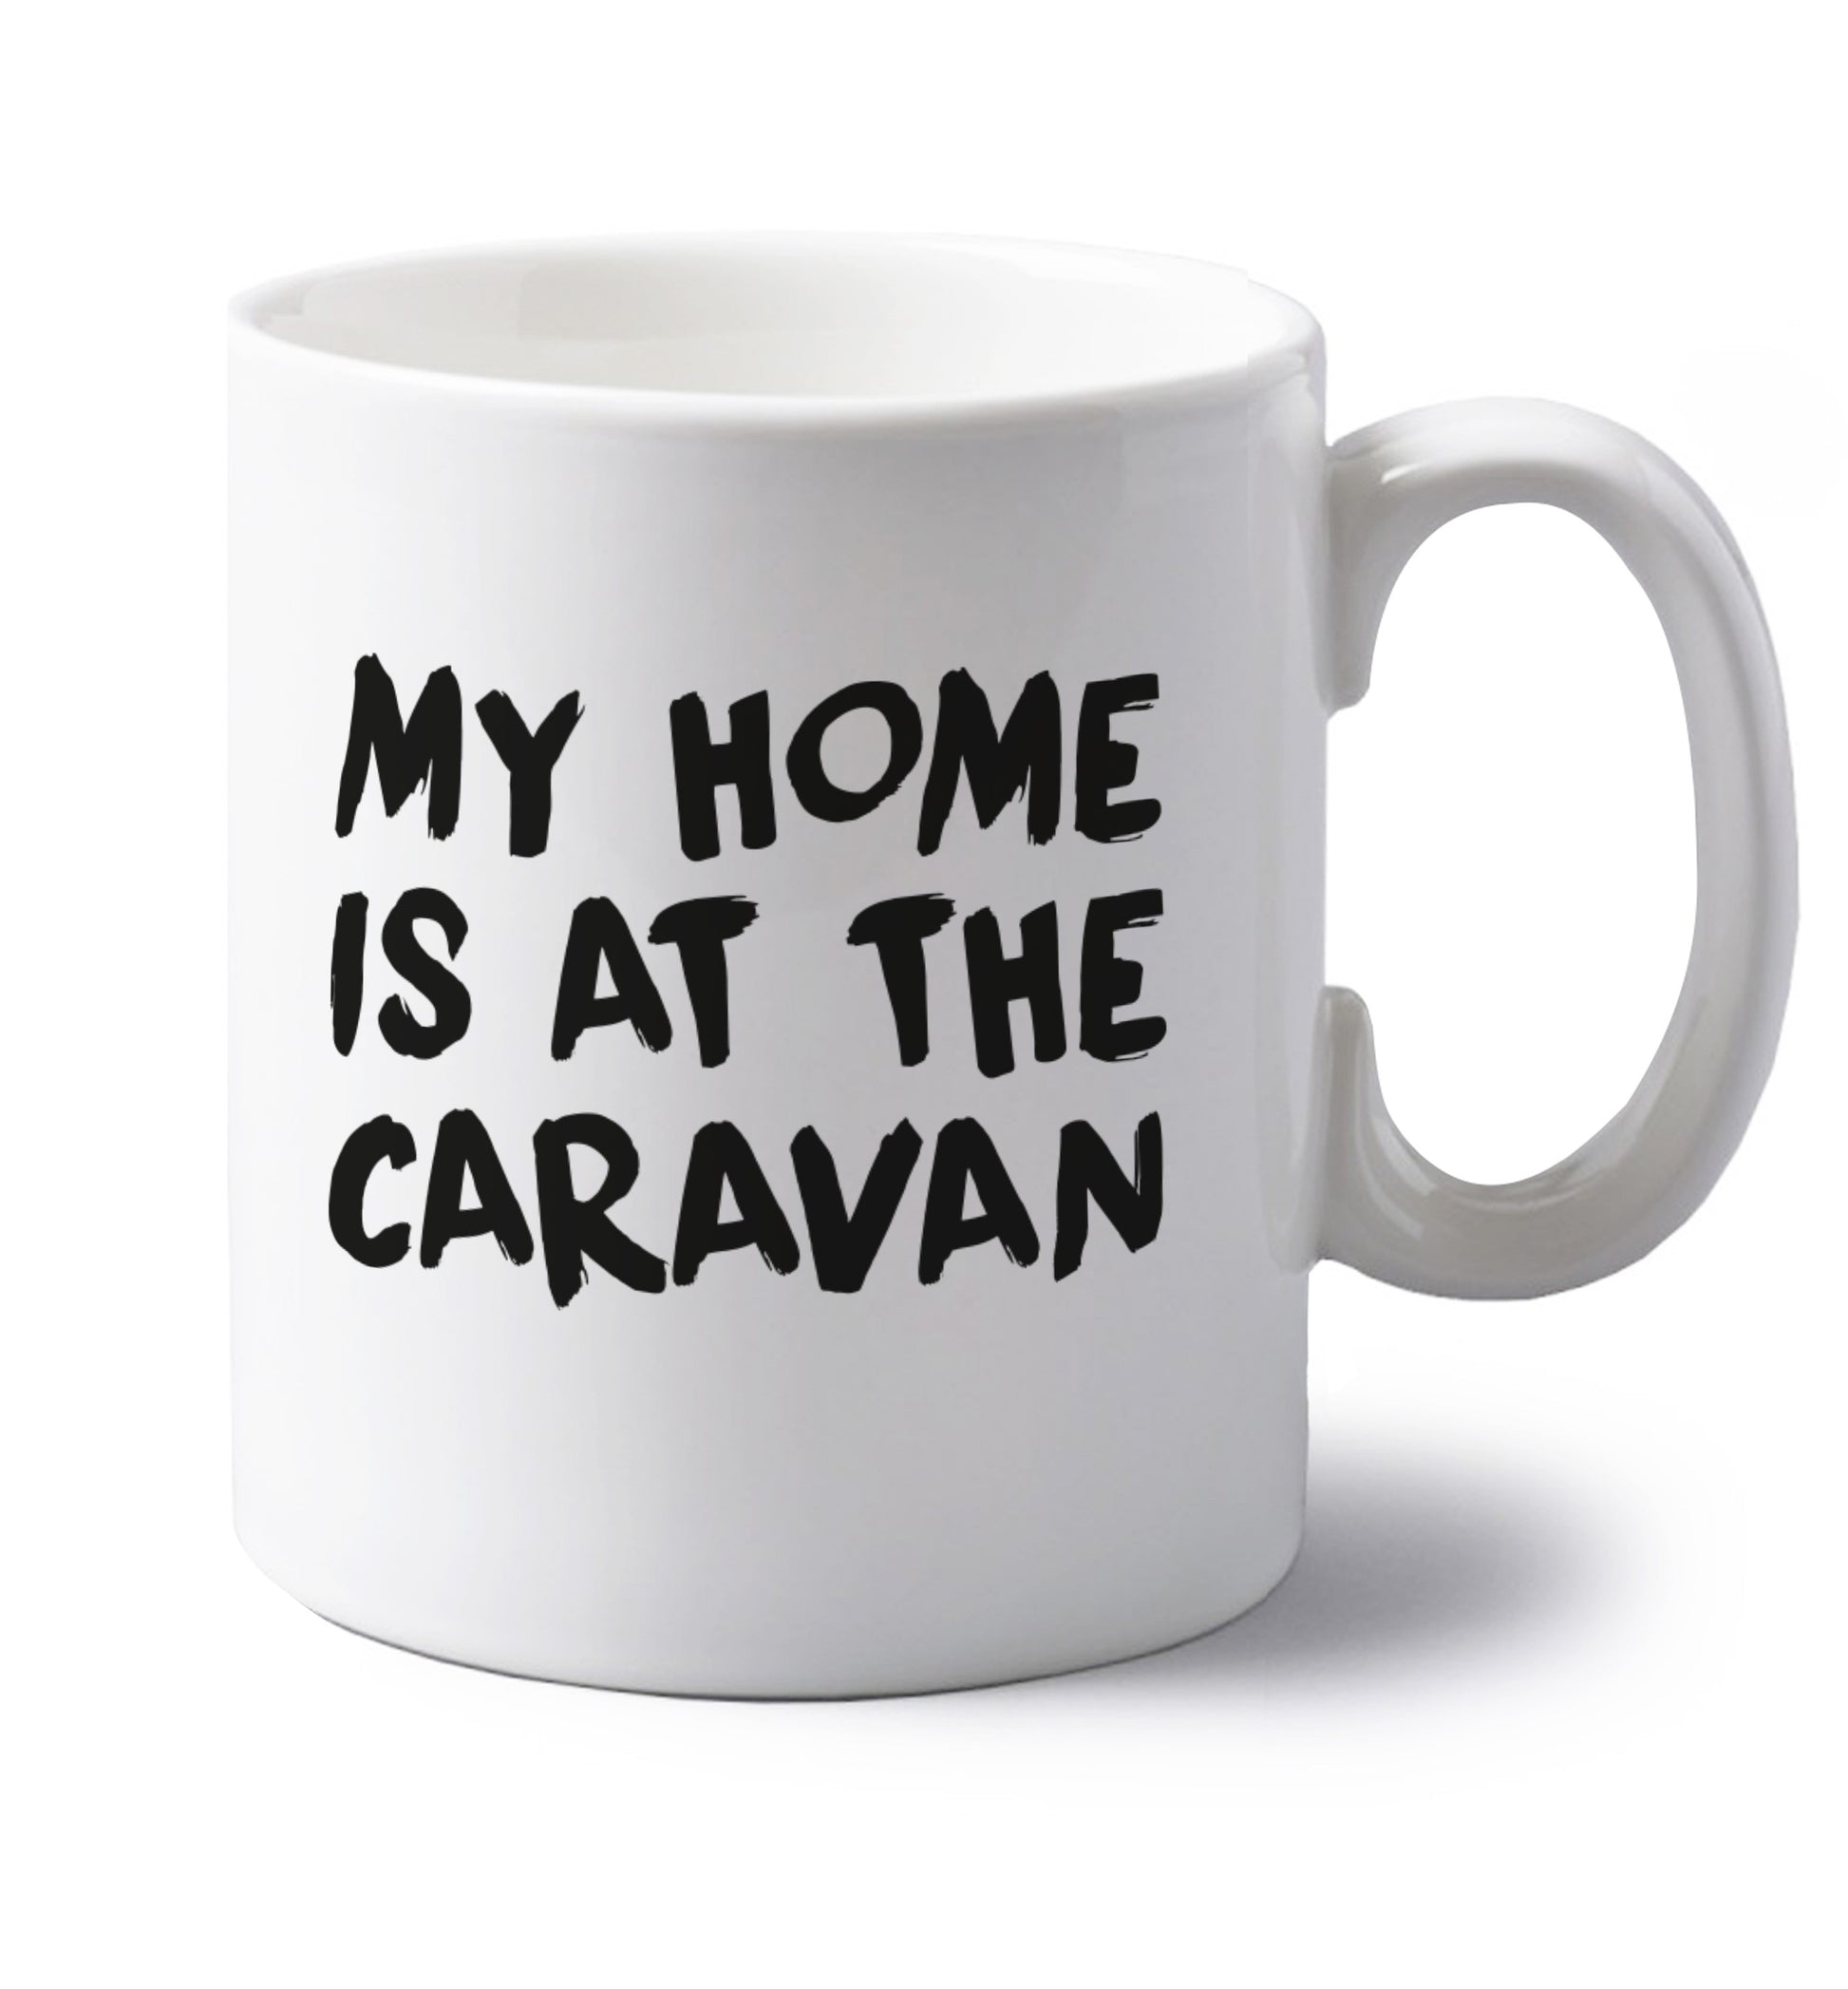 My home is at the caravan left handed white ceramic mug 